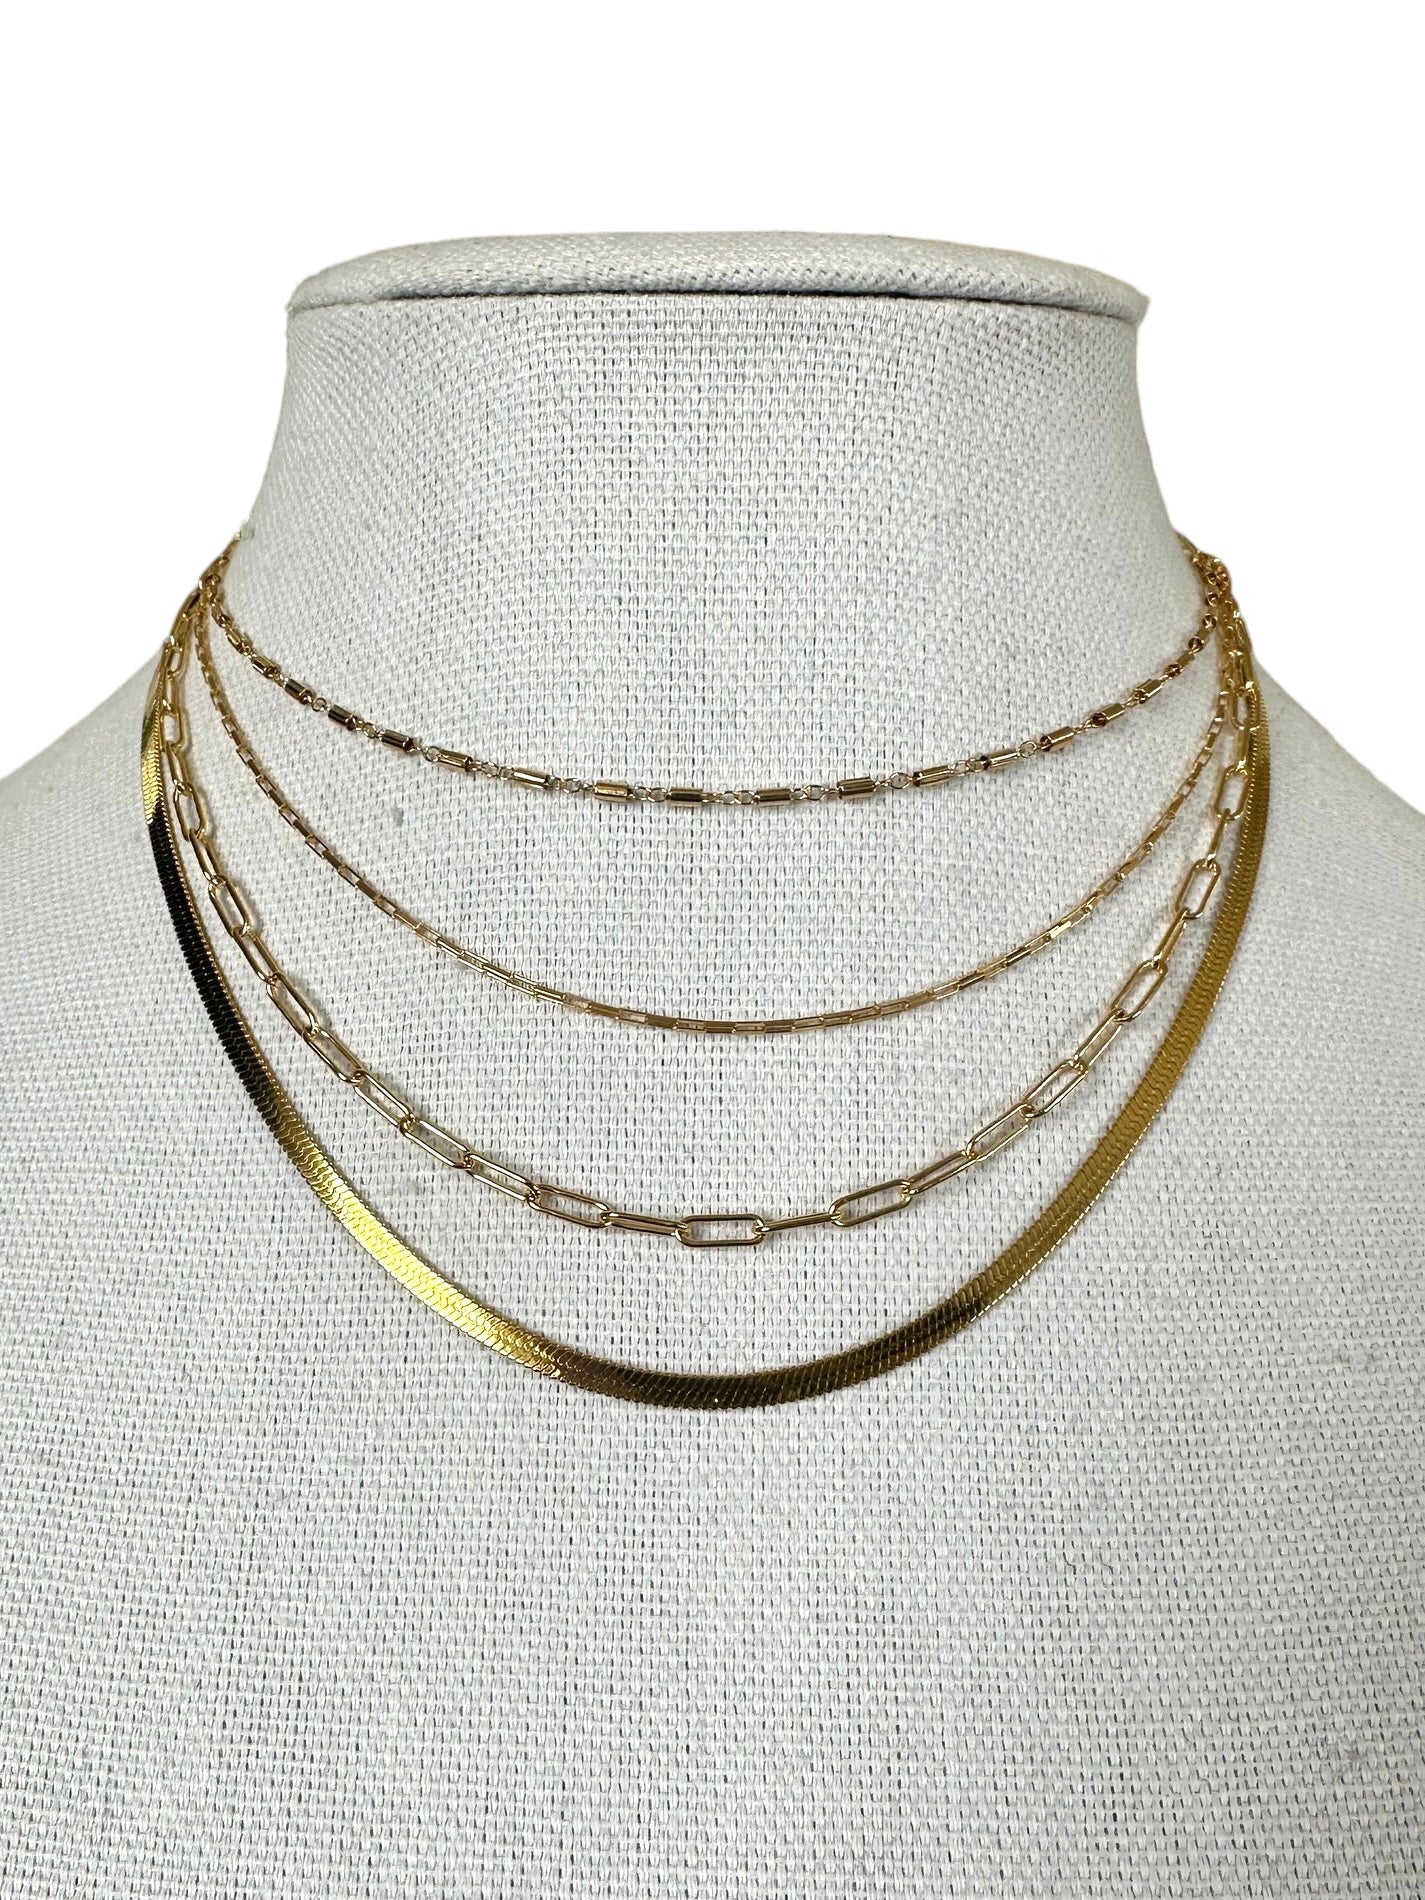 The Venetian Necklace